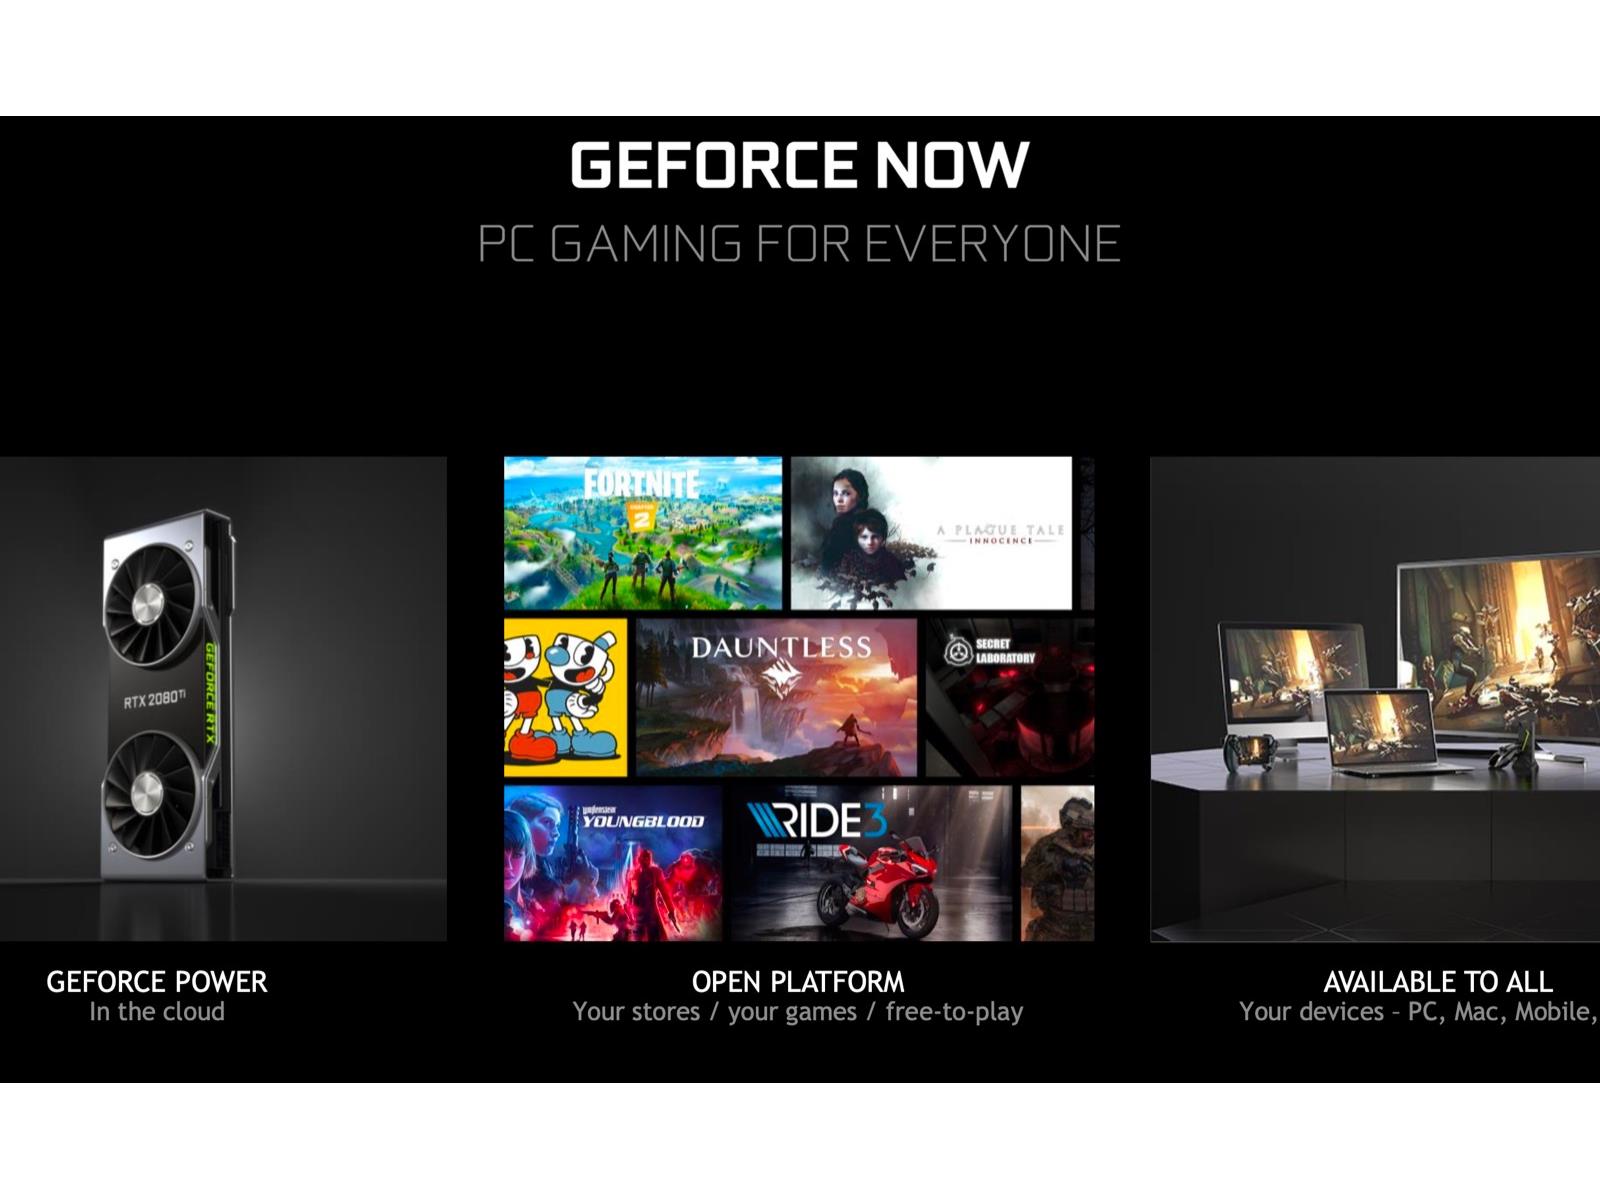 NVIDIA GeForce NOW – Beta Sign Up